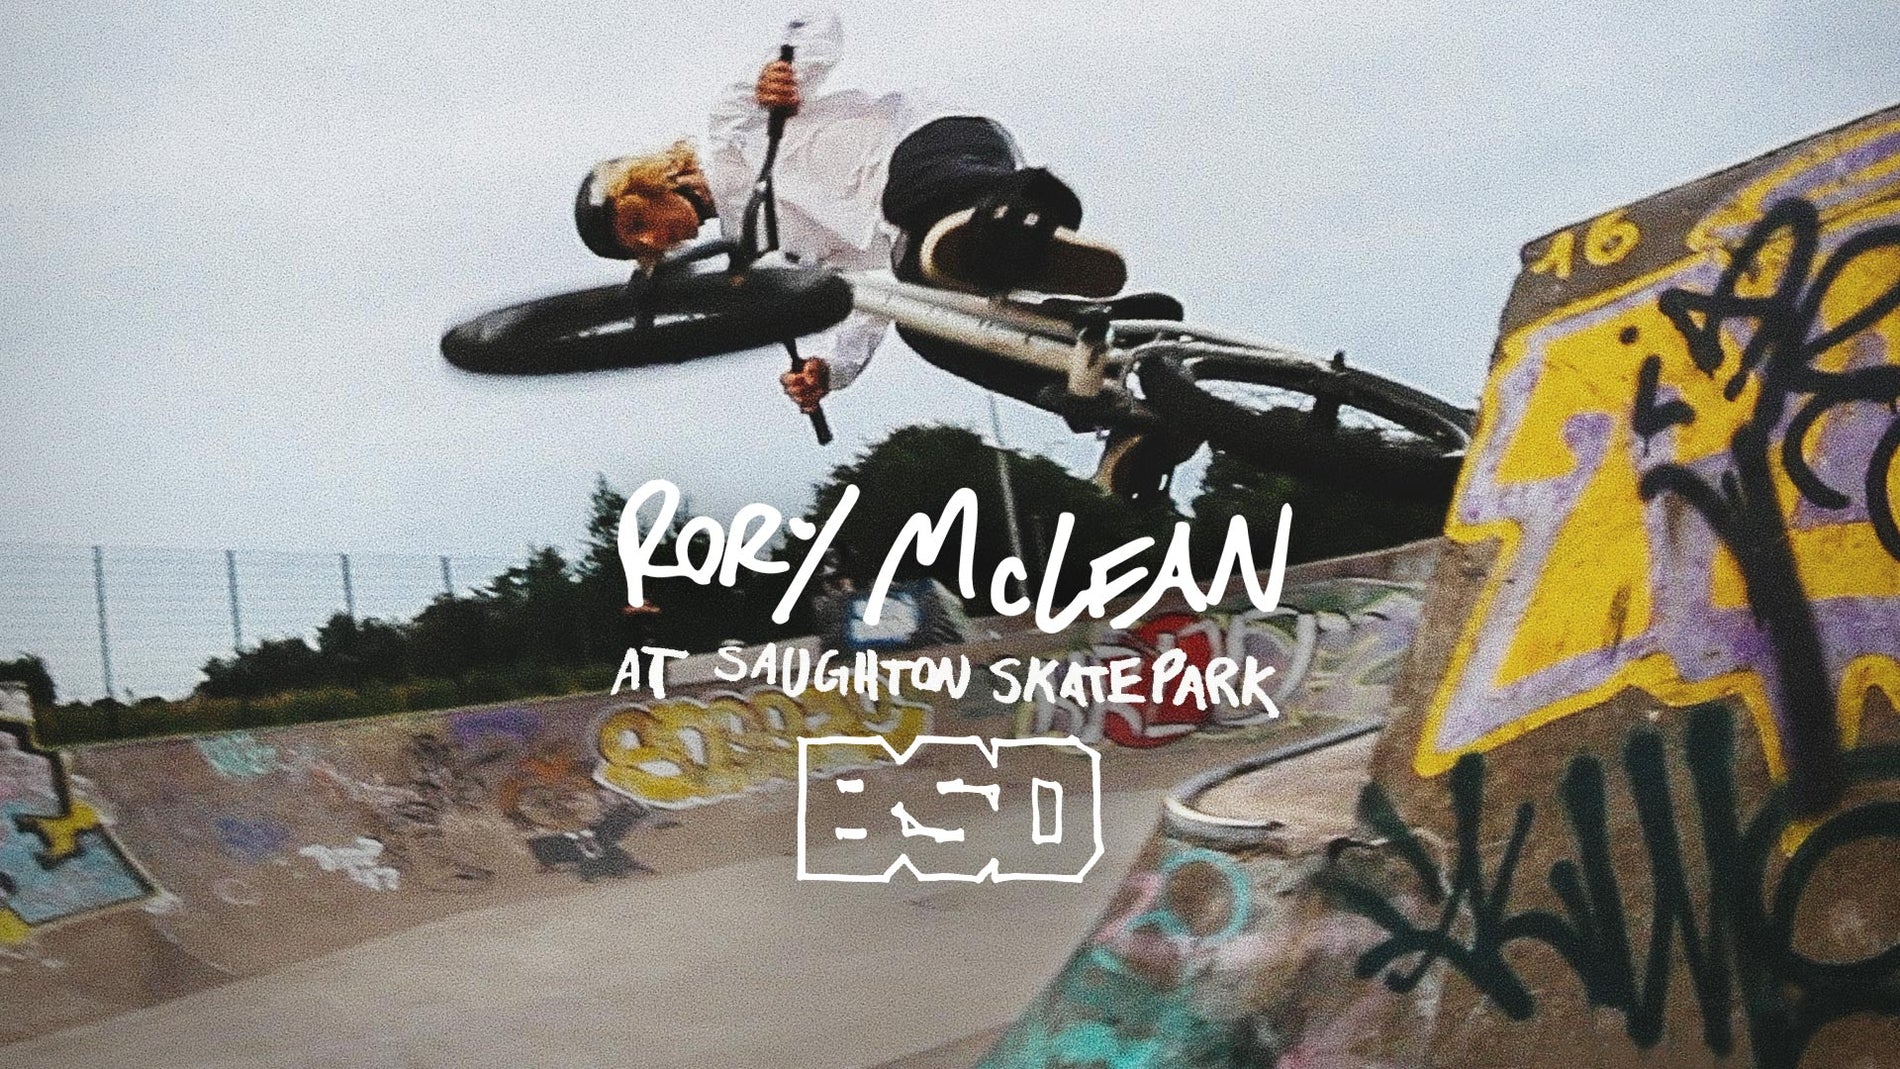 Rory Mclean at Saughton Skatepark